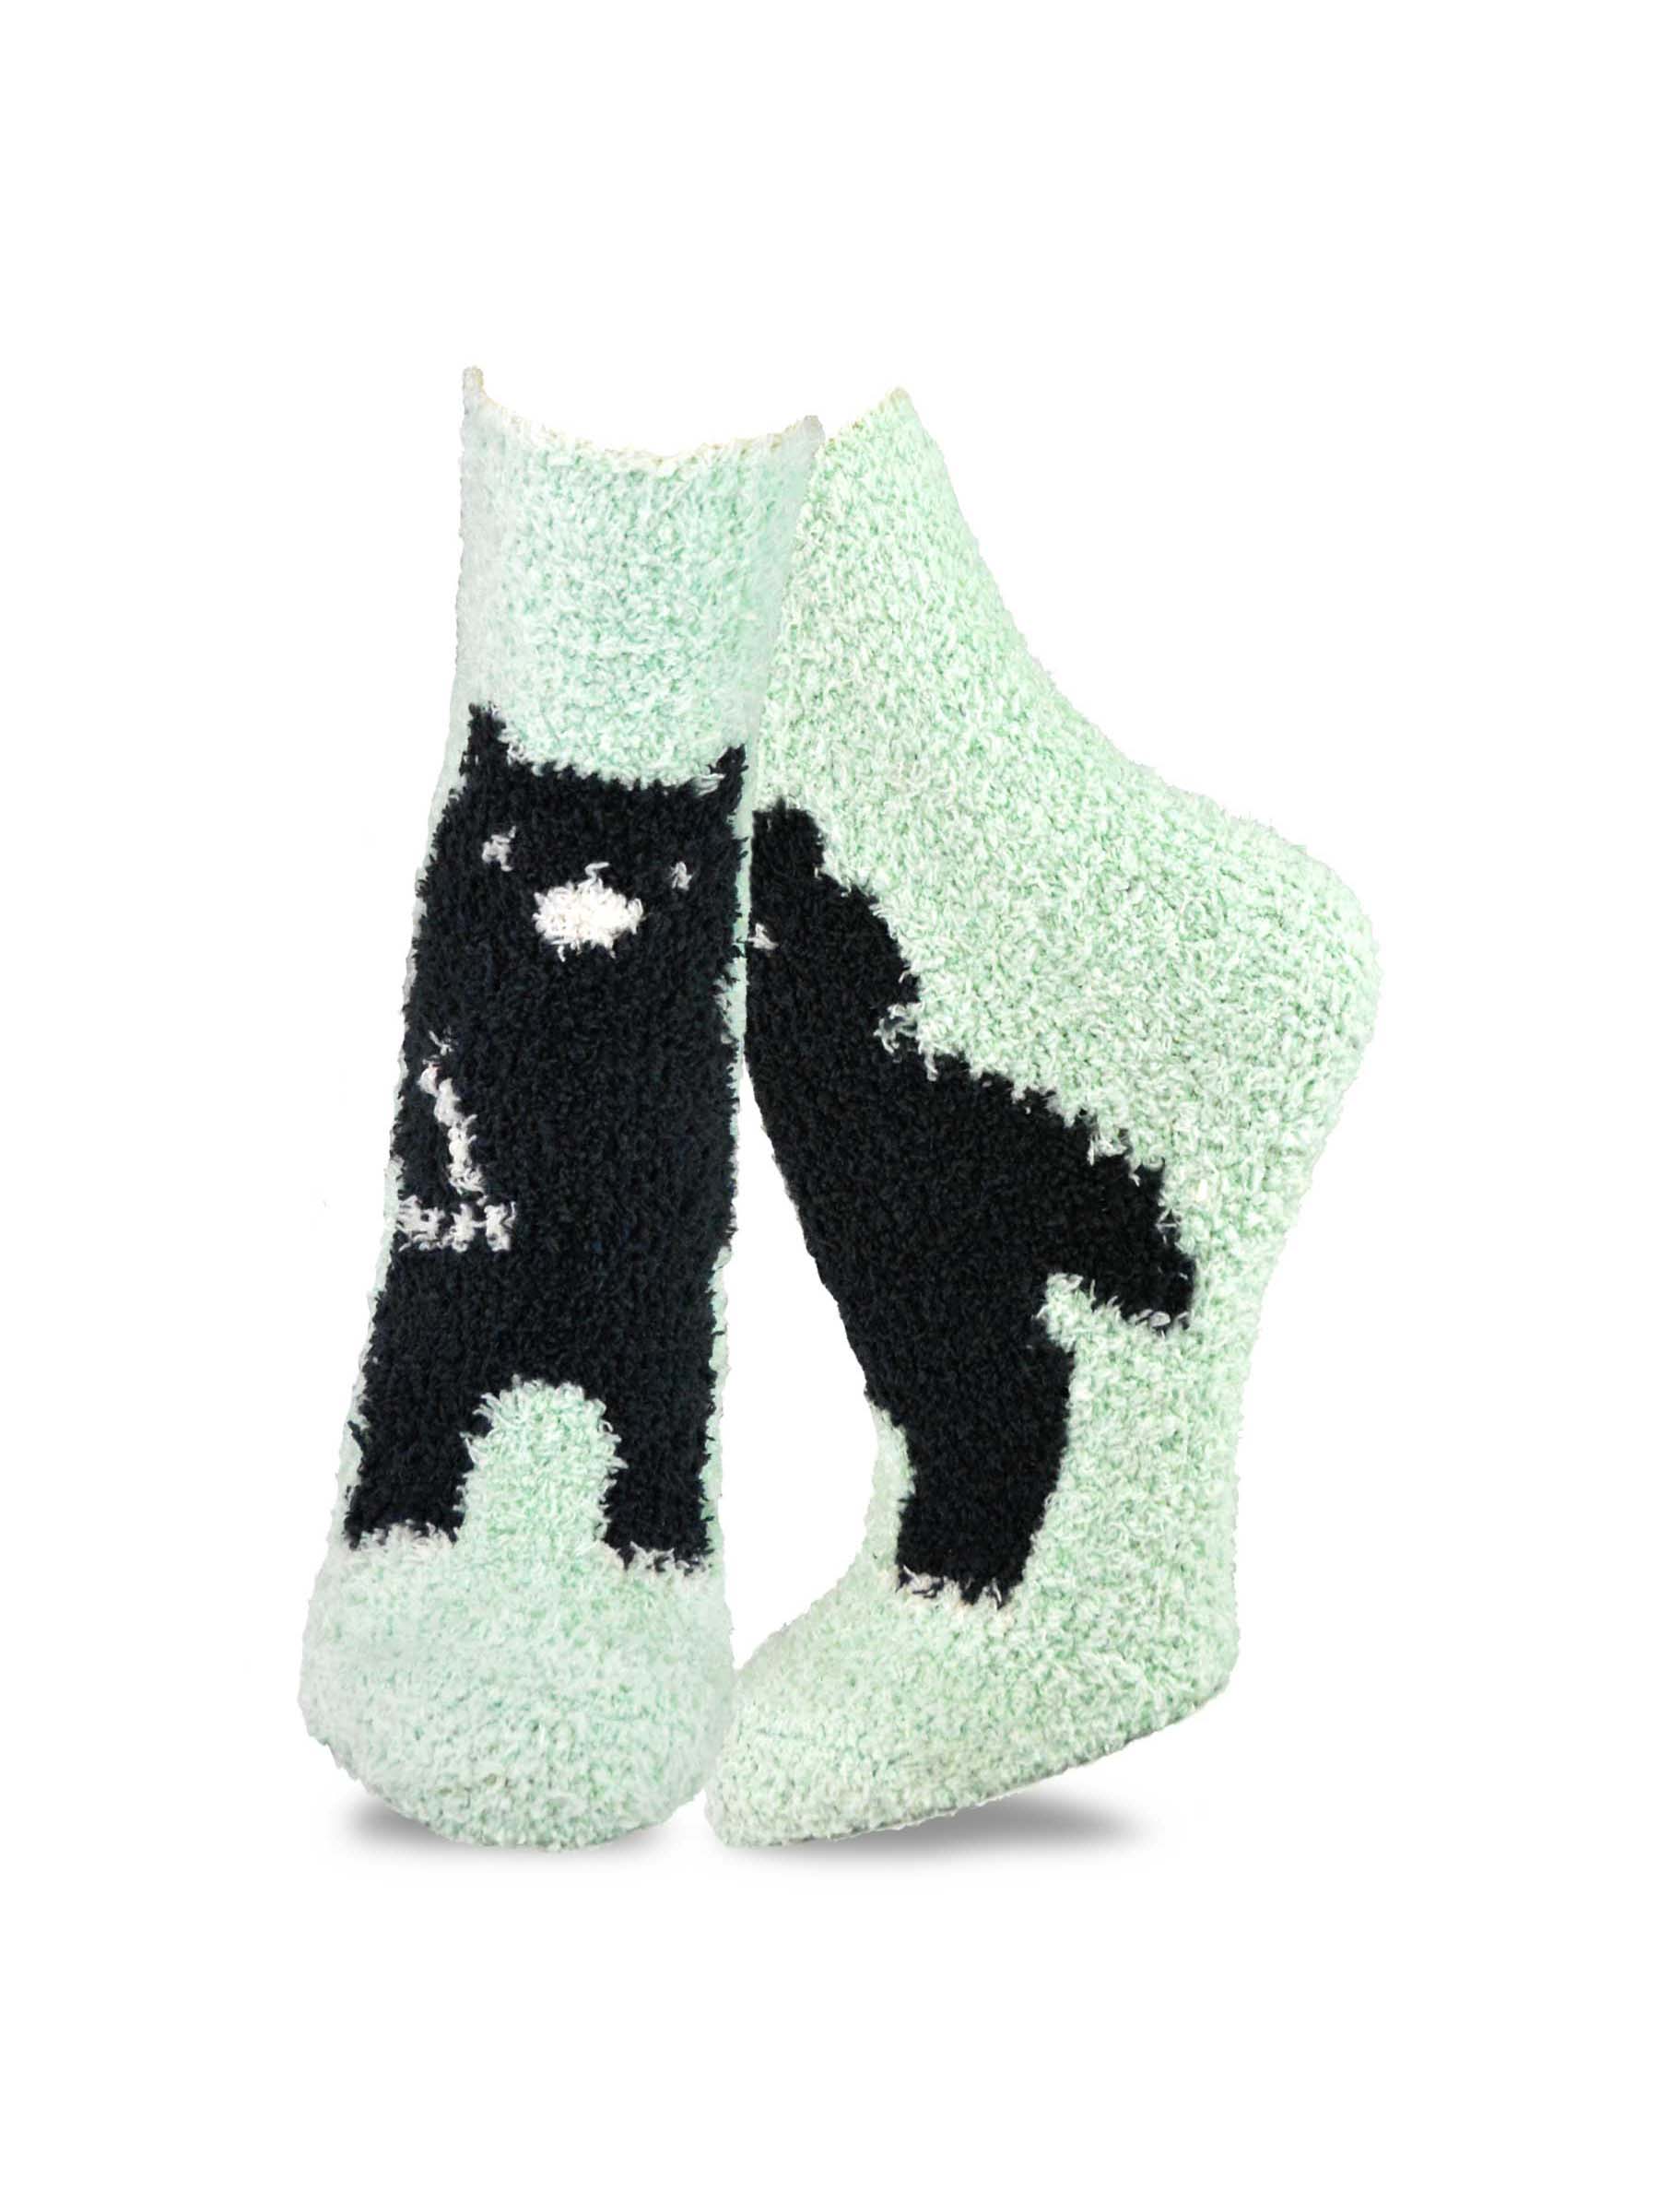 TeeHee Fashionable Cozy Fuzzy Slipper Crew Socks for Women 5-Pack - image 3 of 8